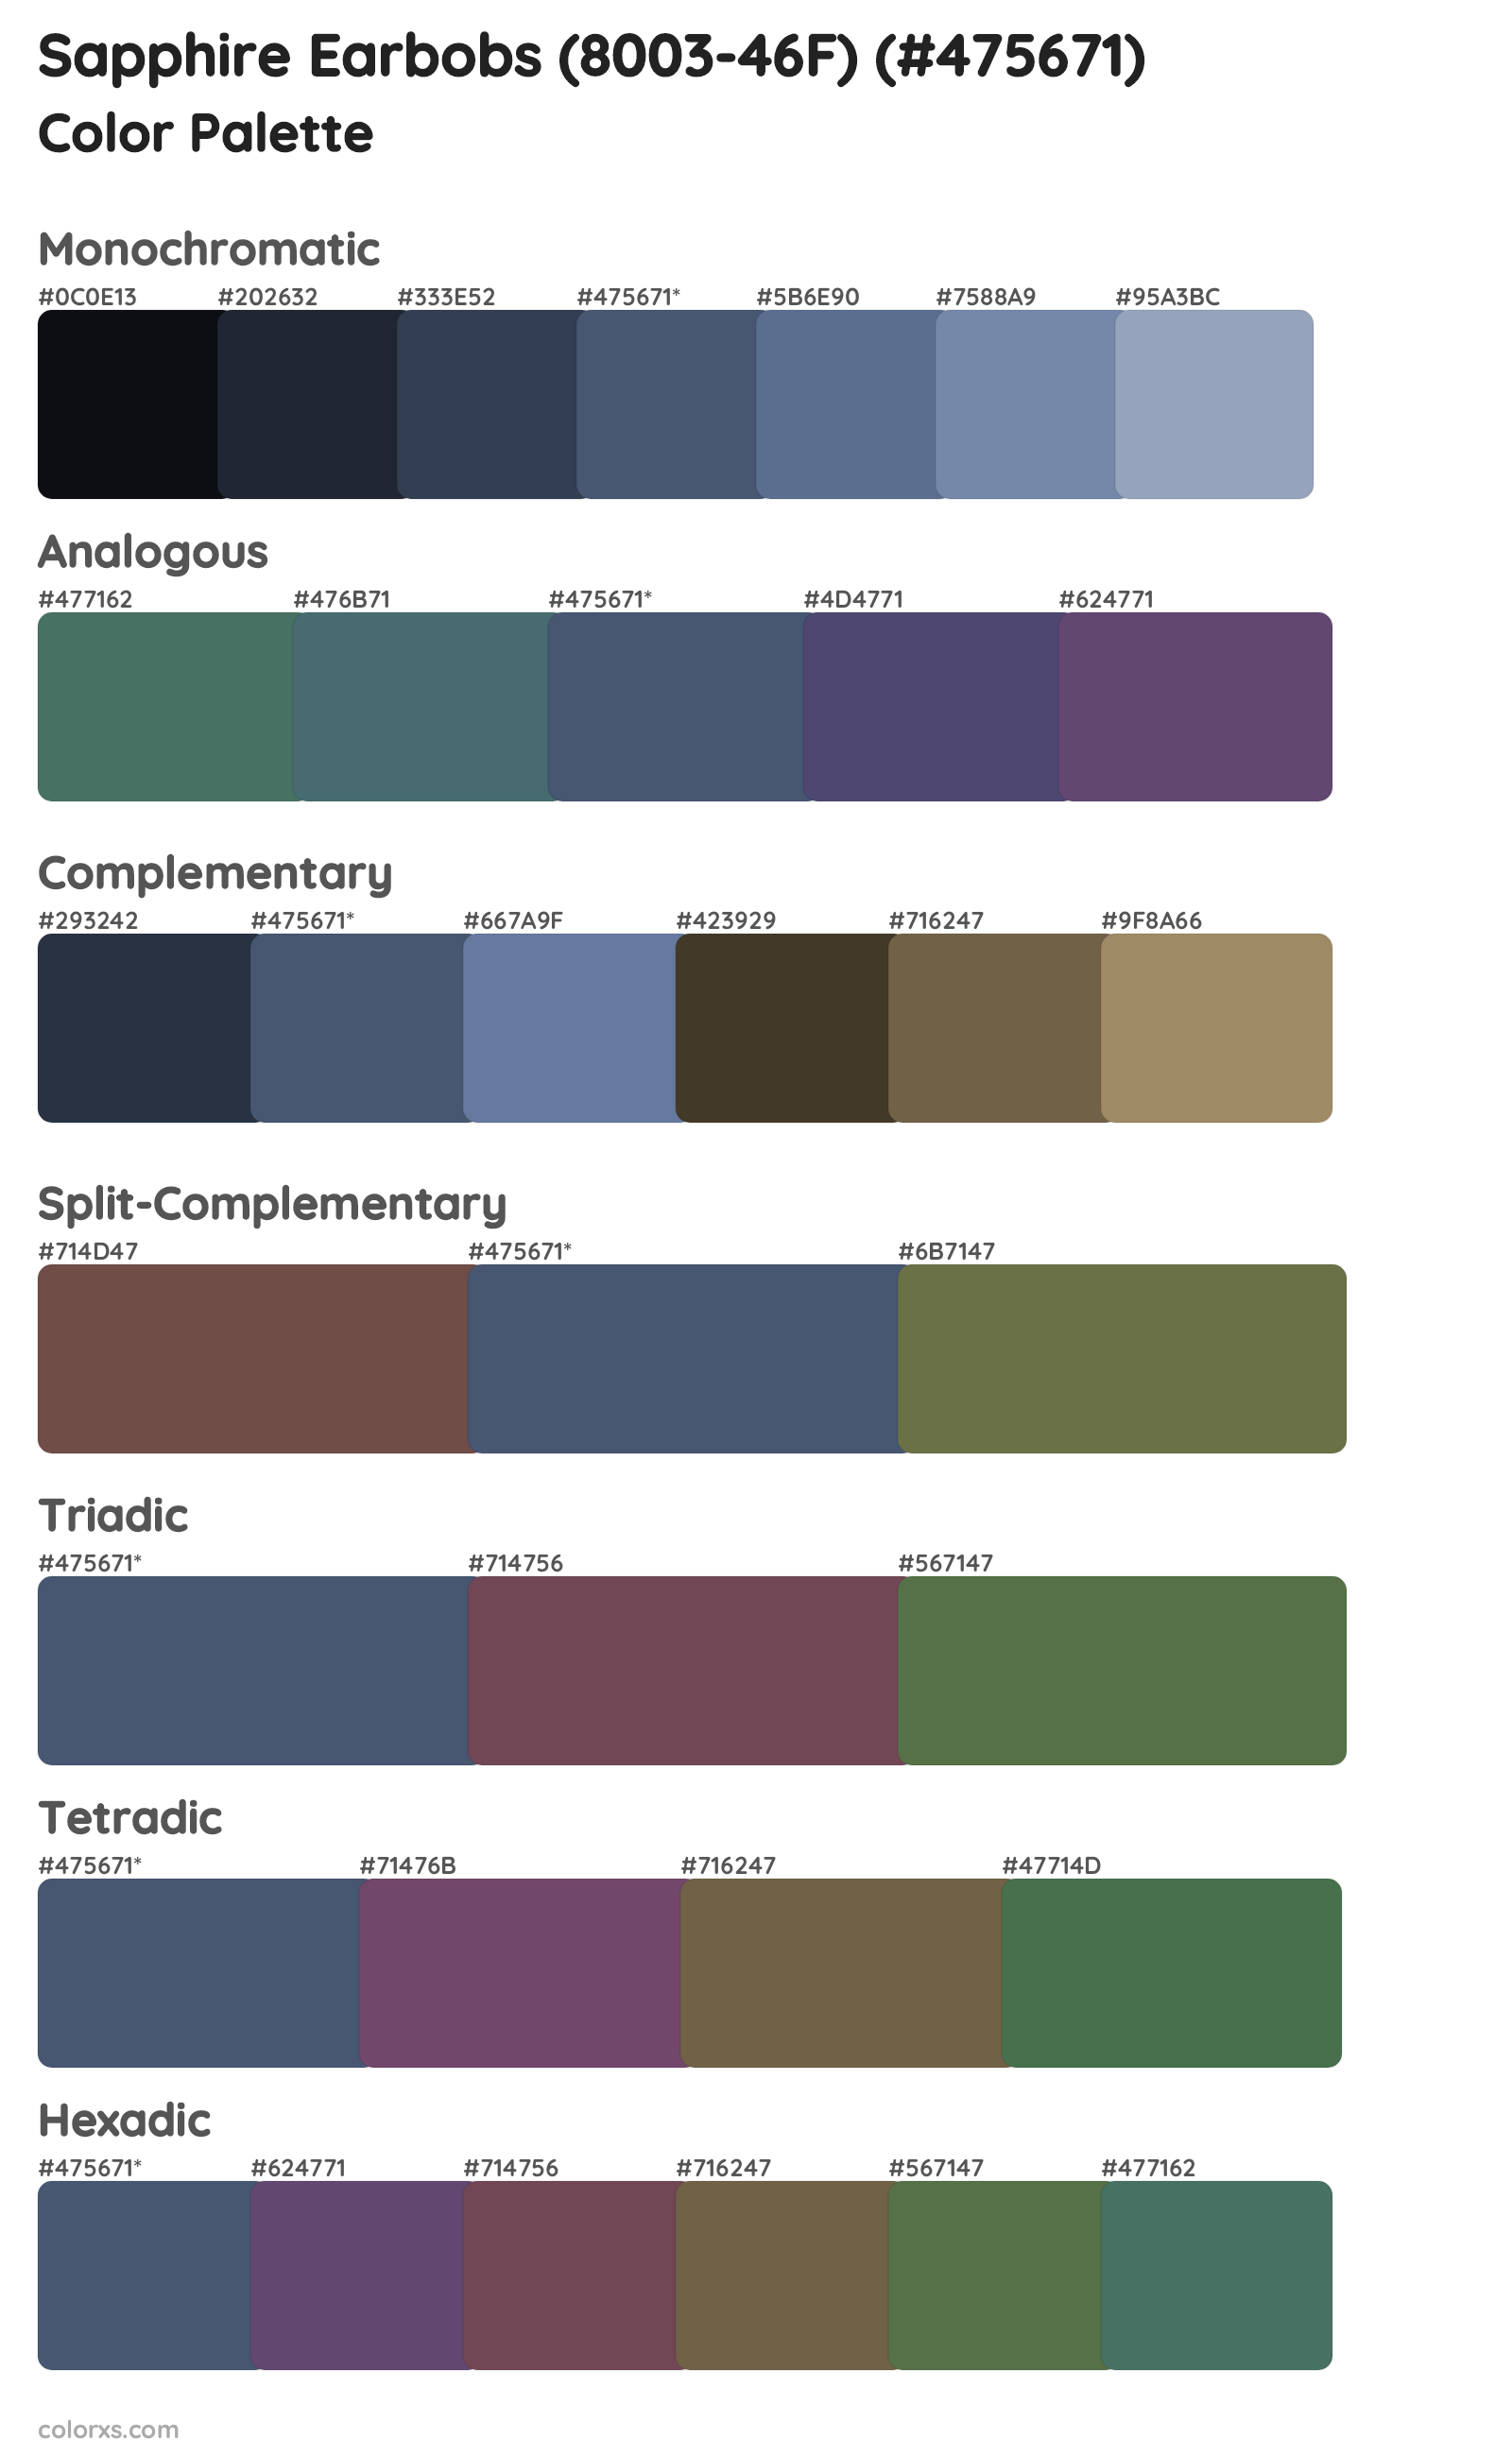 Sapphire Earbobs (8003-46F) Color Scheme Palettes